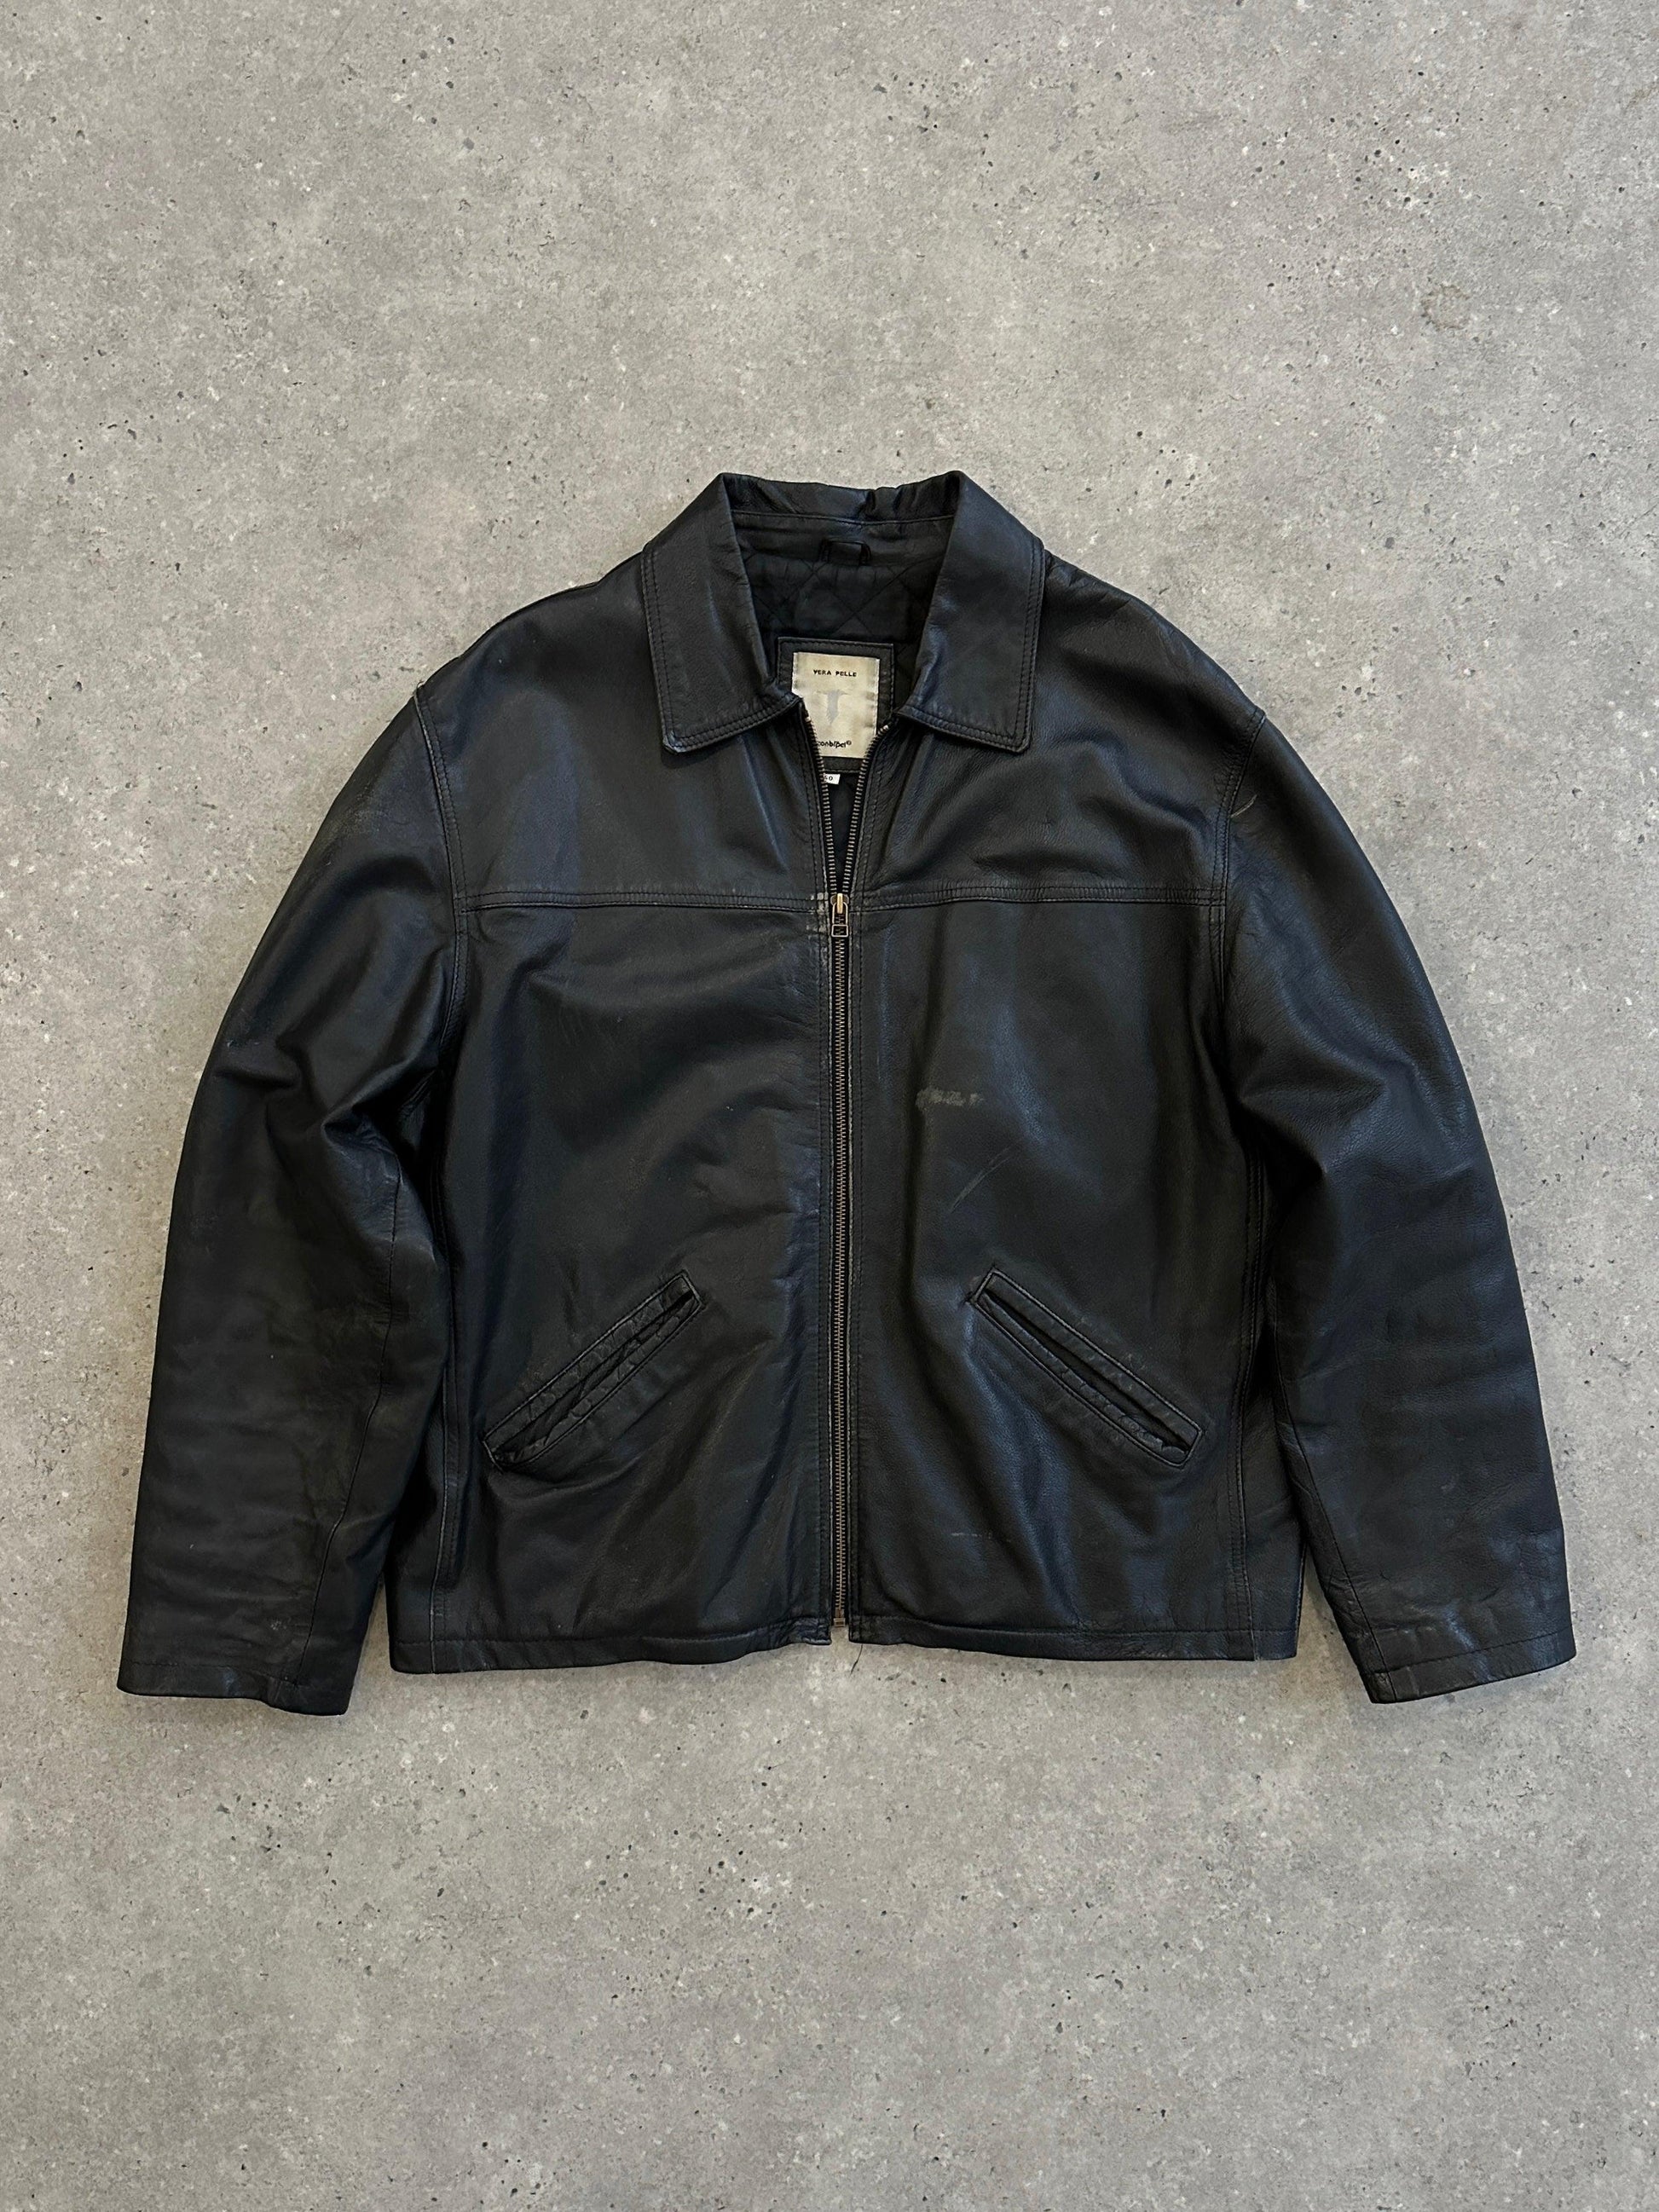 Italian Vintage Boxy Leather Jacket - M/L - Known Source